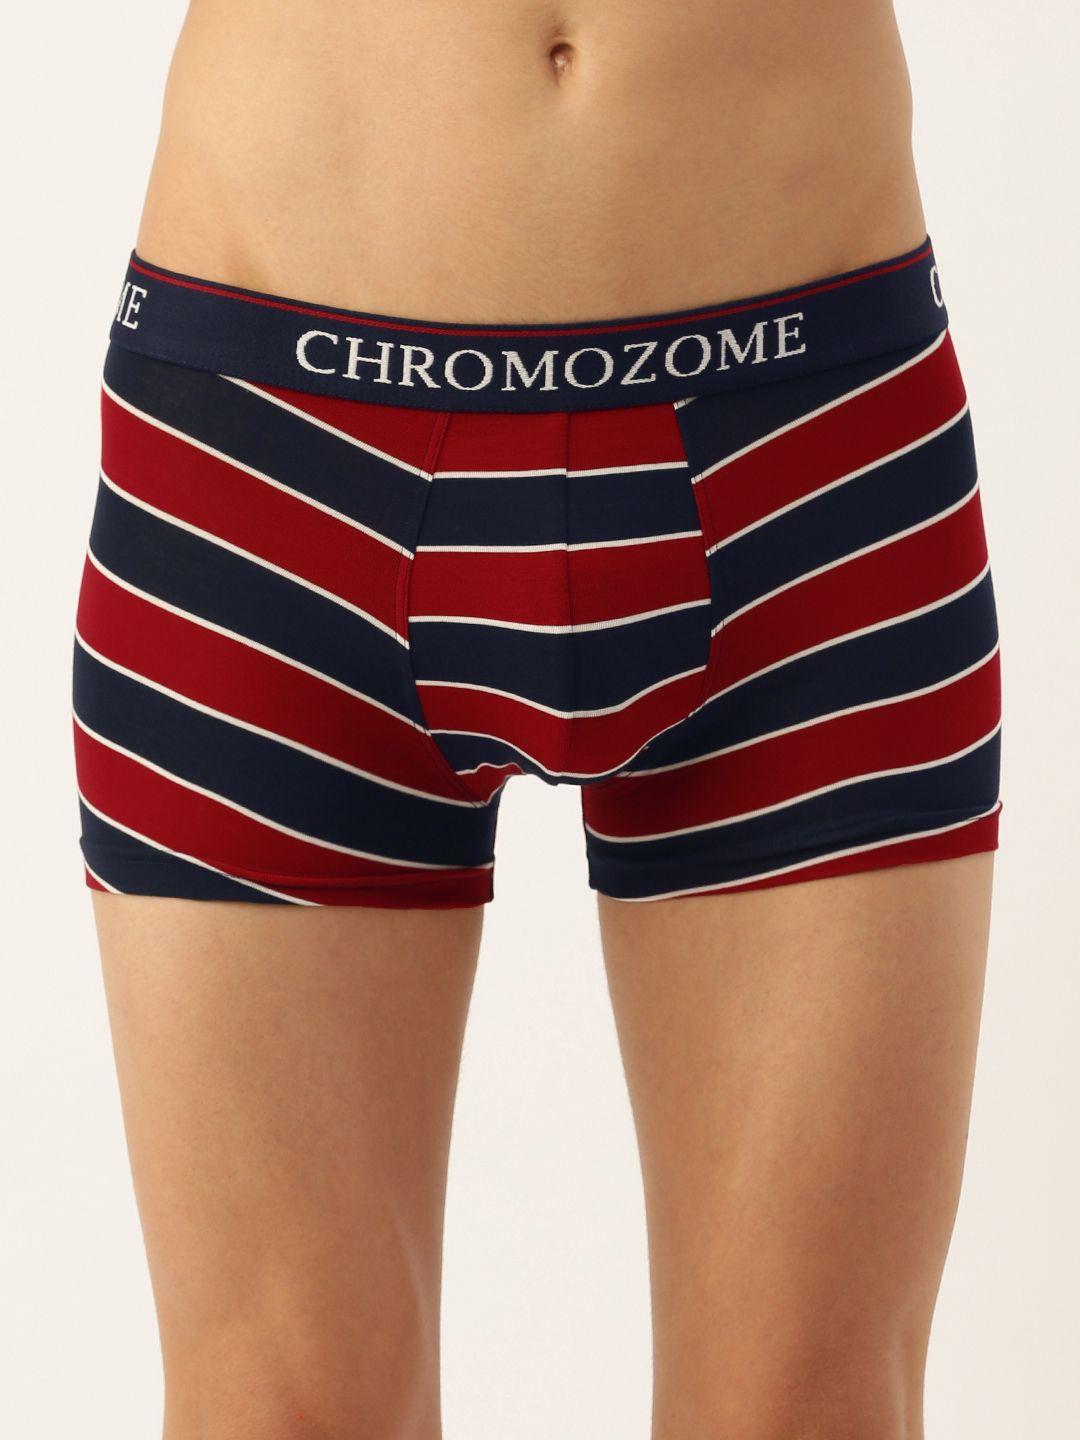 chromozome men ultra-premium micro-modal striped trunk 8902733643306